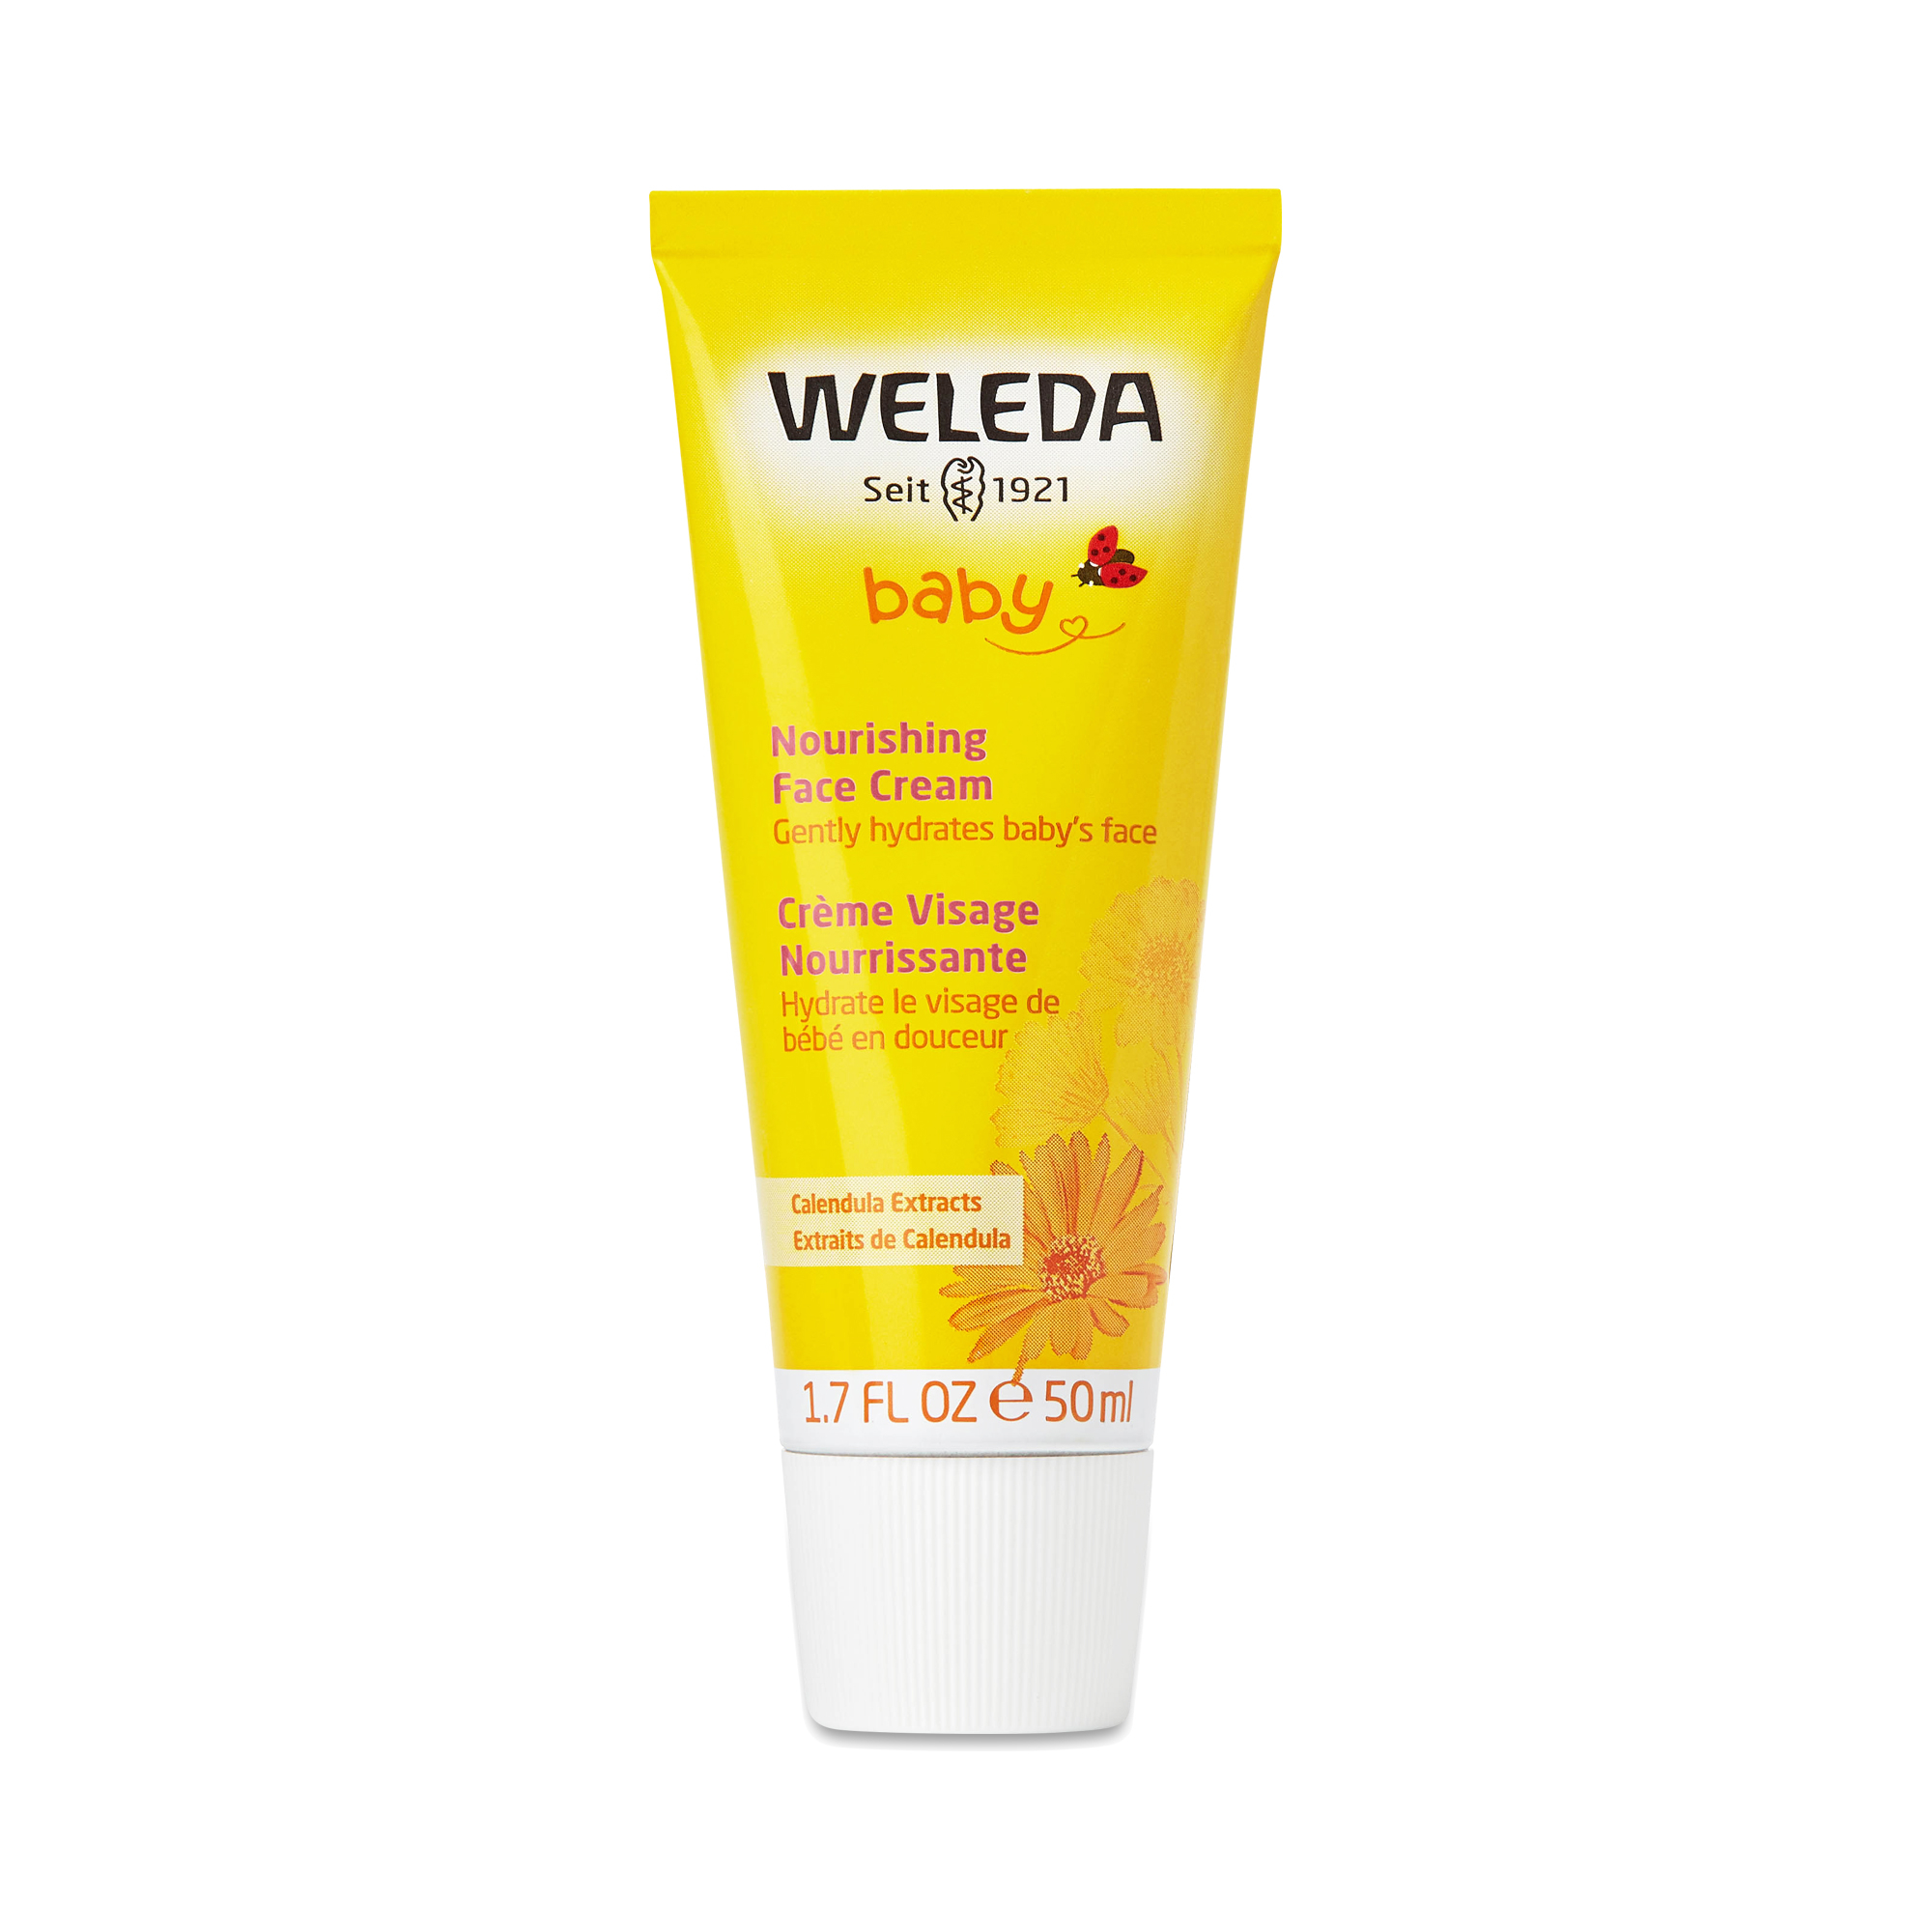 Weleda Nourishing Face Cream 1.7 fl oz tube